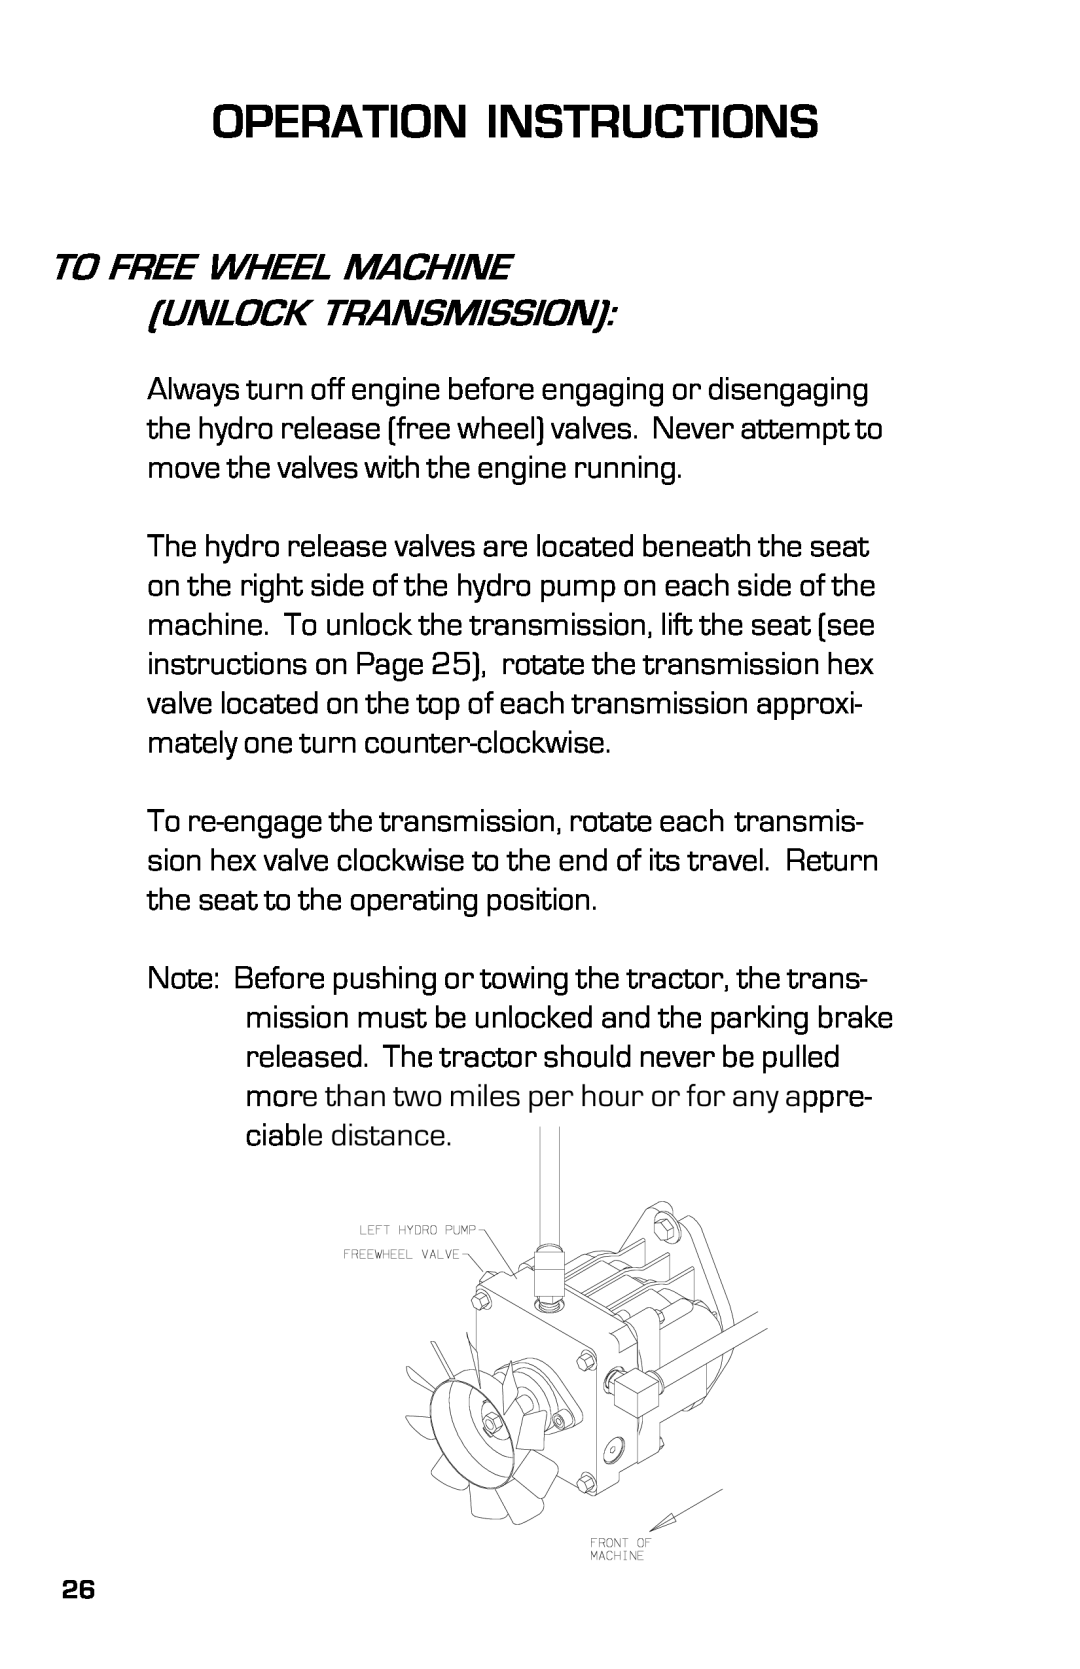 Dixon 8000D manual To Free Wheel Machine Unlock Transmission, Operation Instructions 